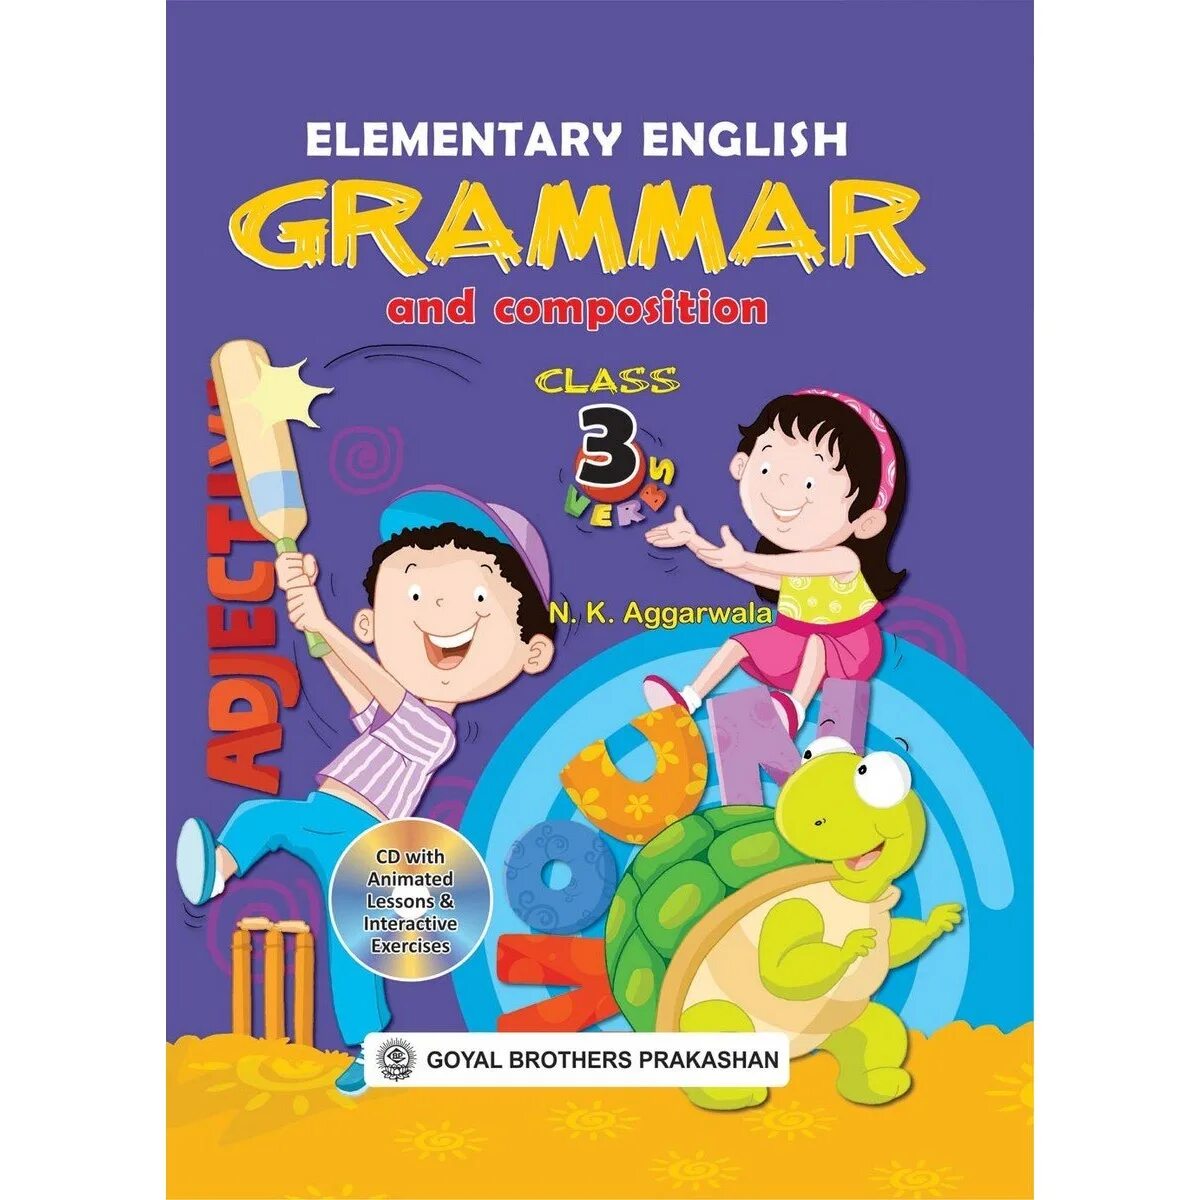 Elementary English Grammar. Elementary English Grammar and Composition. Elementary English Grammar and Composition 5. Popular Grammar and Composition. Elementary english